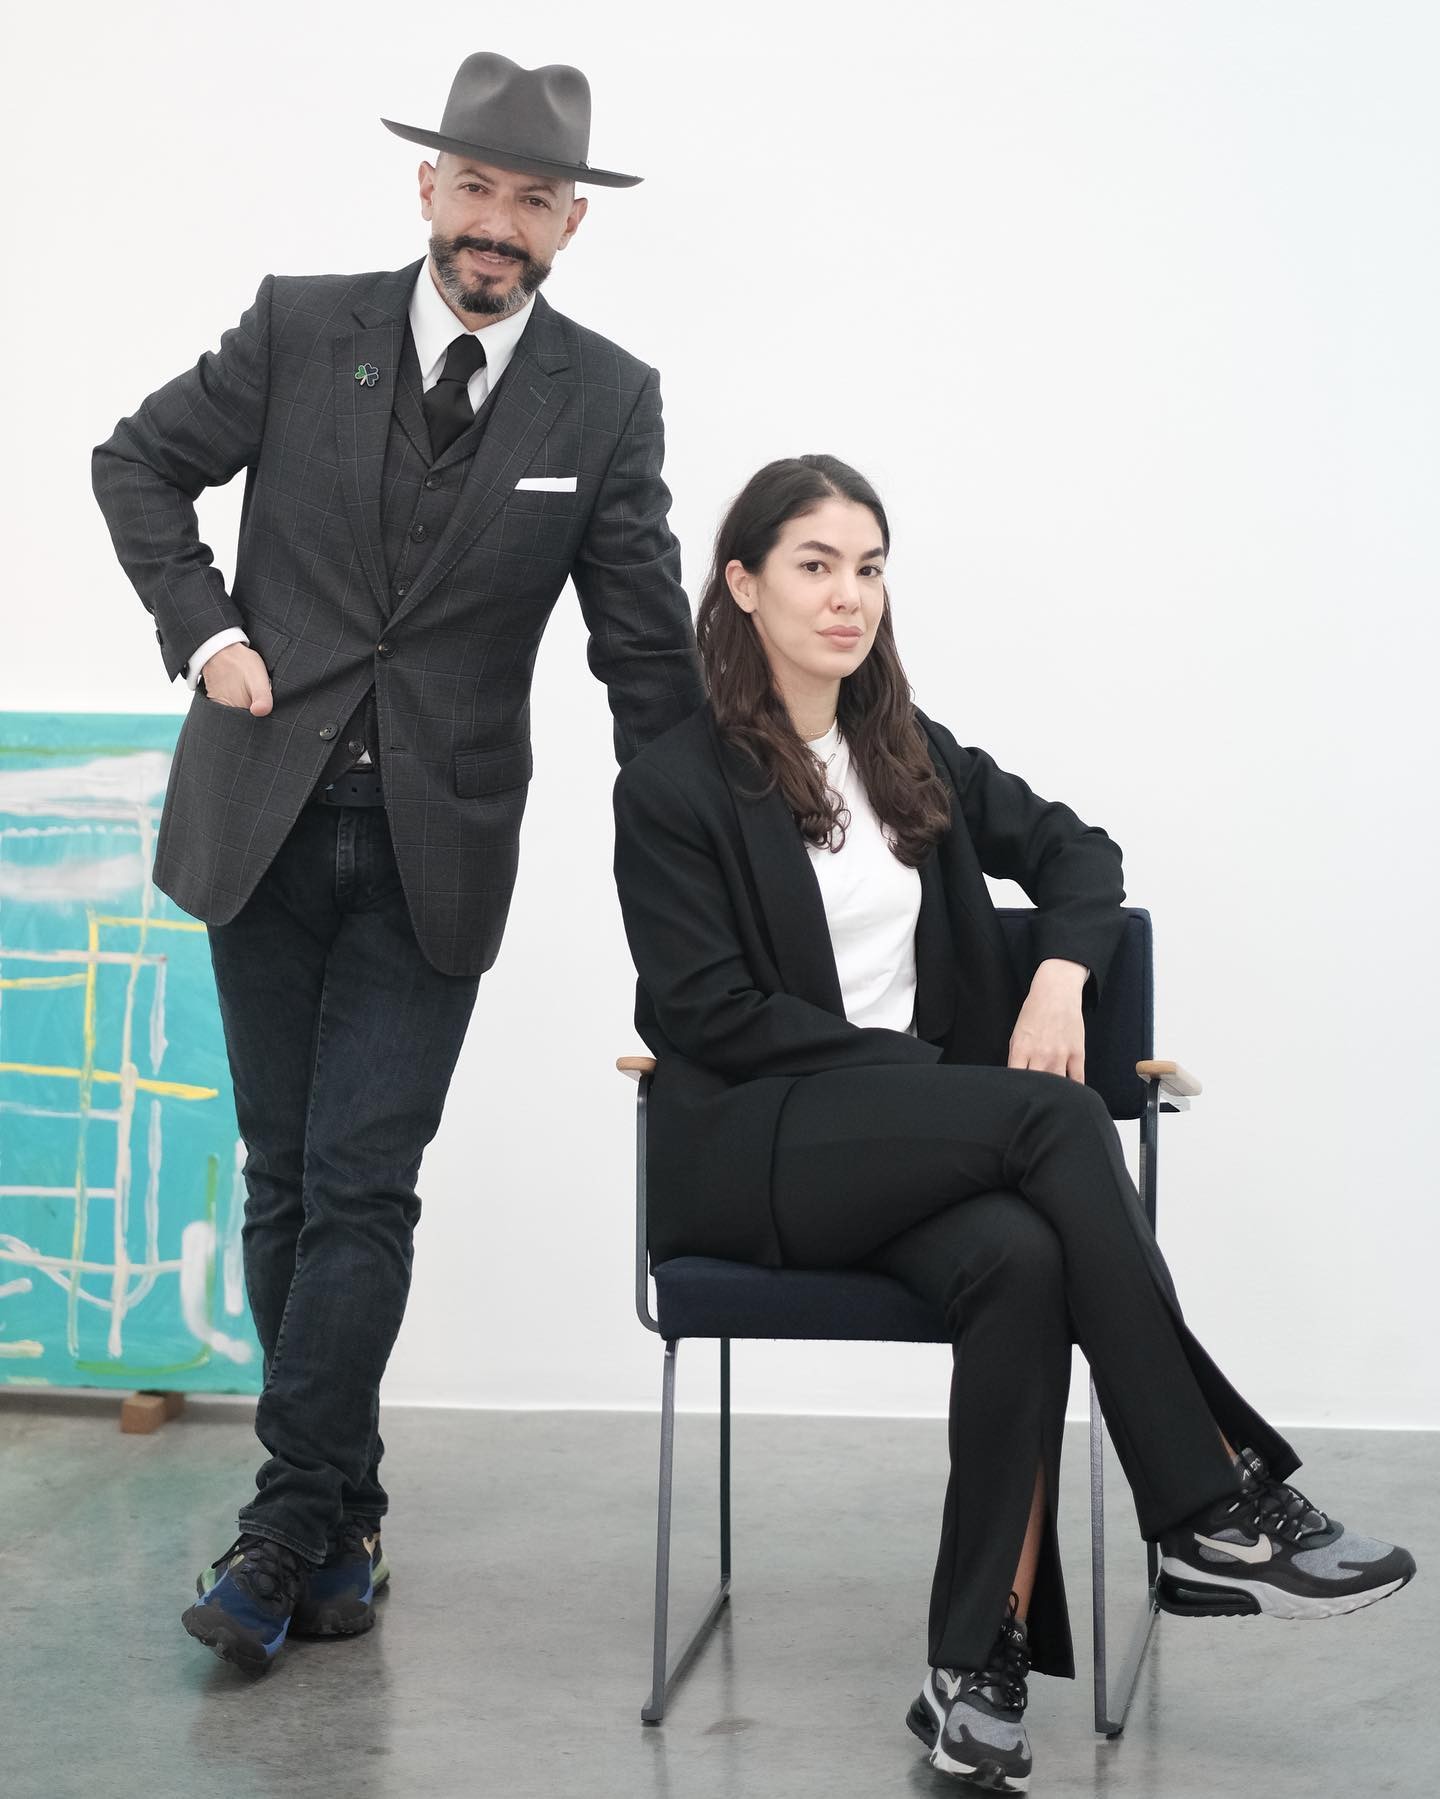  Kourosh Nouri & Nadine Knotzer, co-founders of Carbon 12 gallery